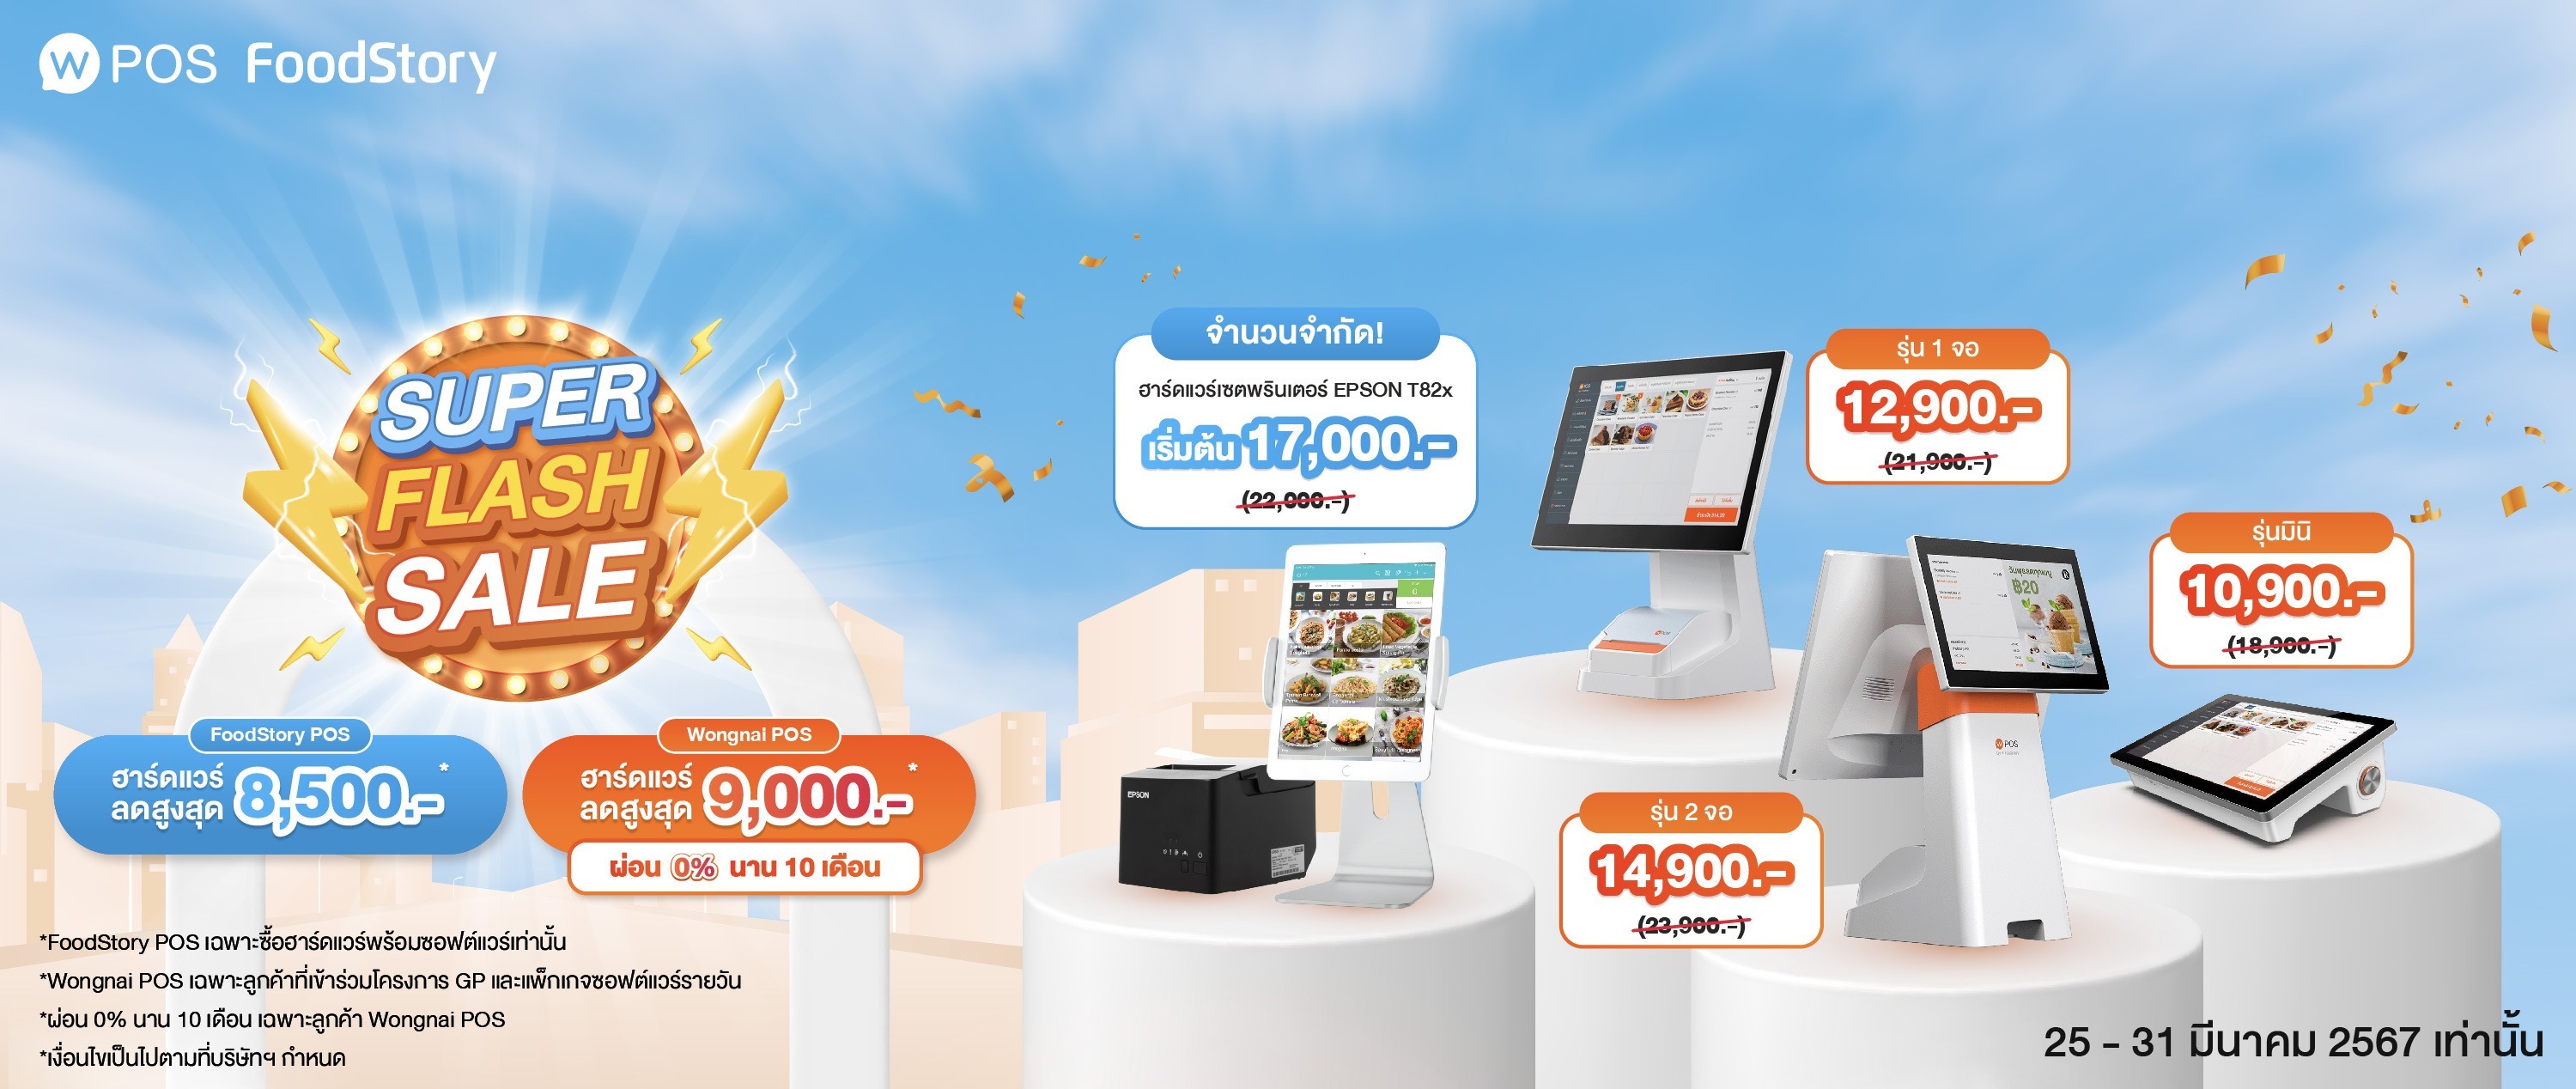 Super Flash Sale Wongnai POS & FoodStory POS ลดสูงสุด 9,000.- ผ่อน 0% นาน 10 เดือน